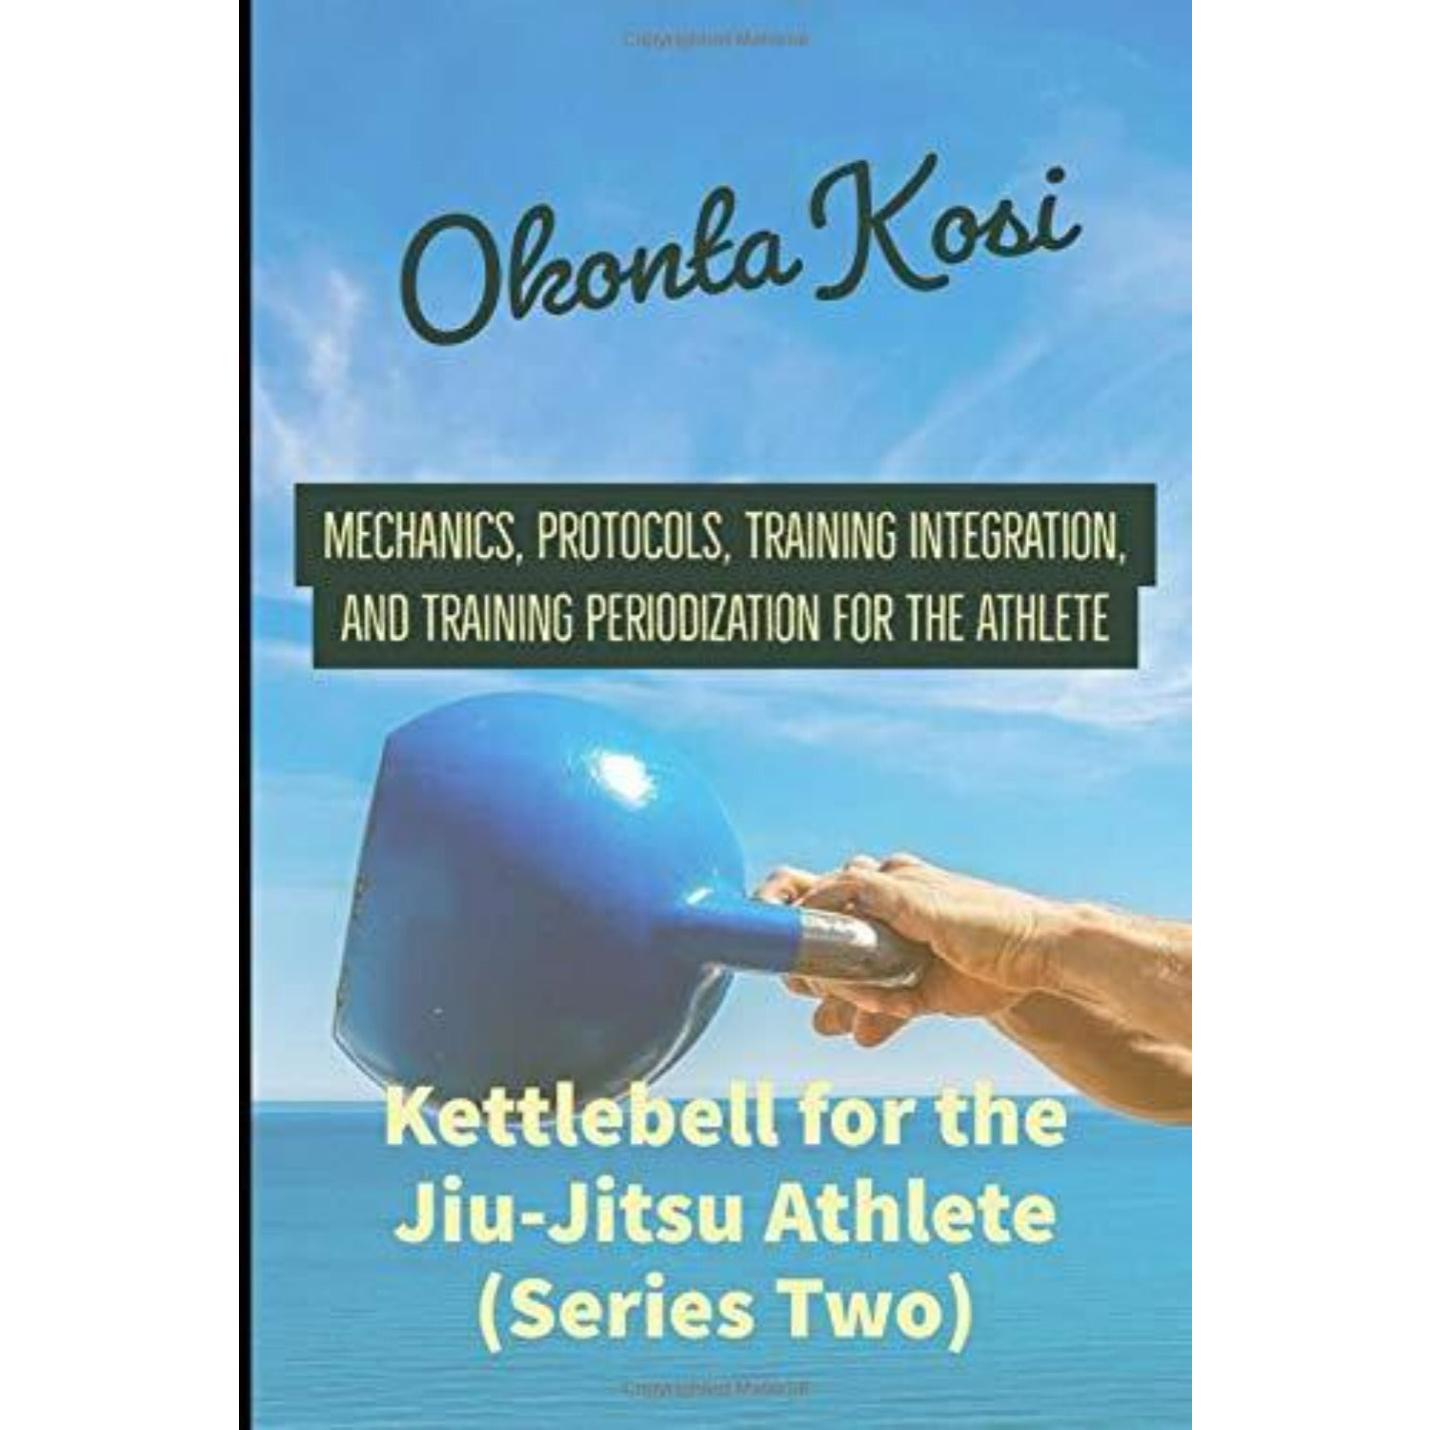 Kettlebell For the Jiu-Jitsu Athlete (Series Two): Mechanics, Protocols, Training Integration, and Training Periodization for the Athlete - happygetfit.com